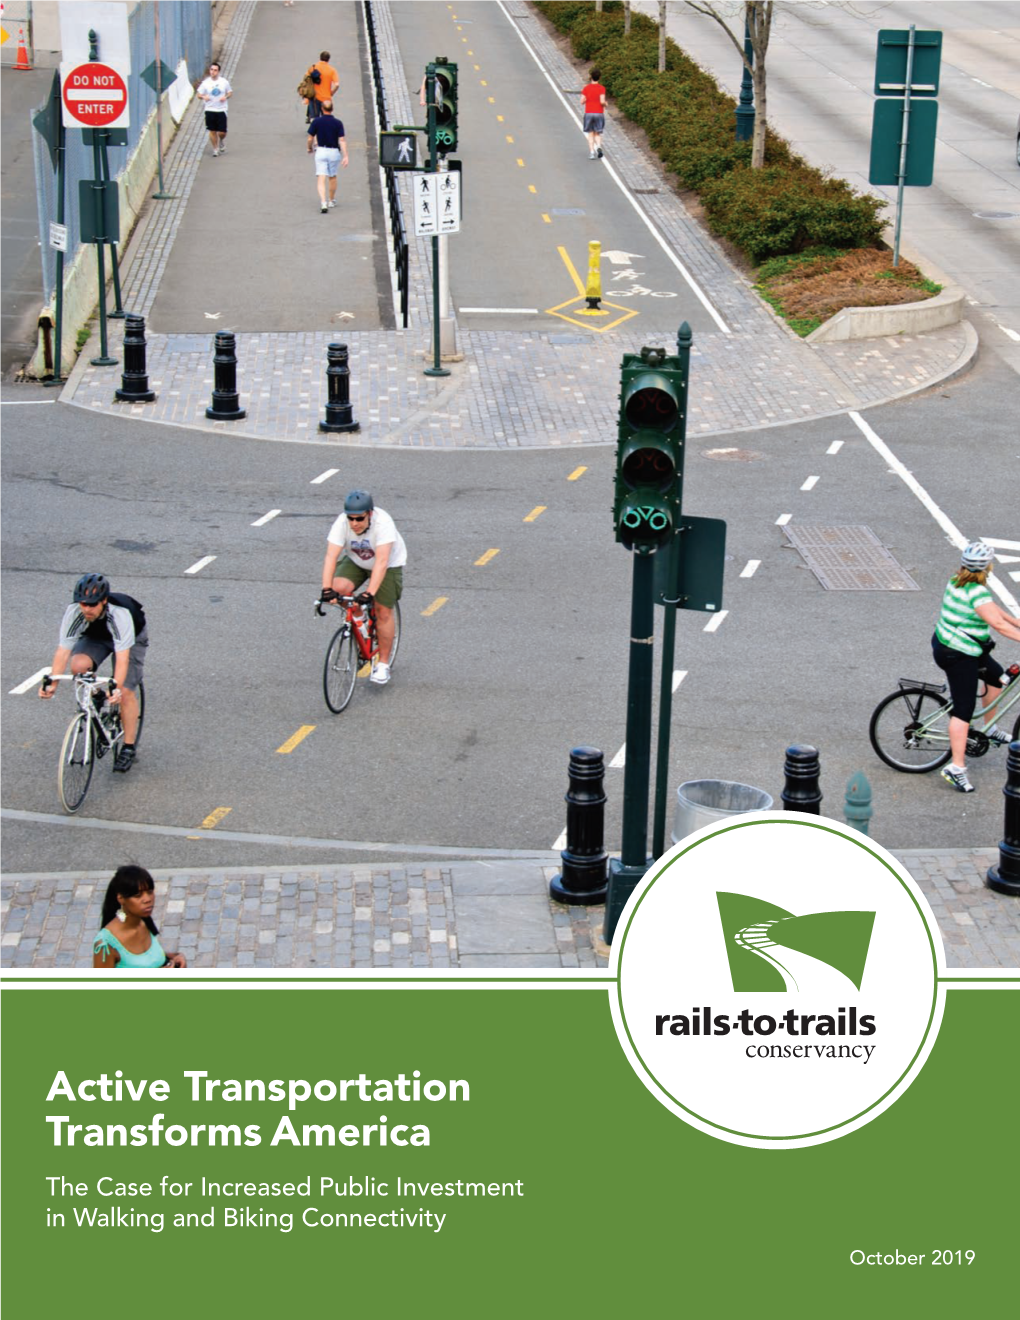 Active Transportation Transforms America" Report